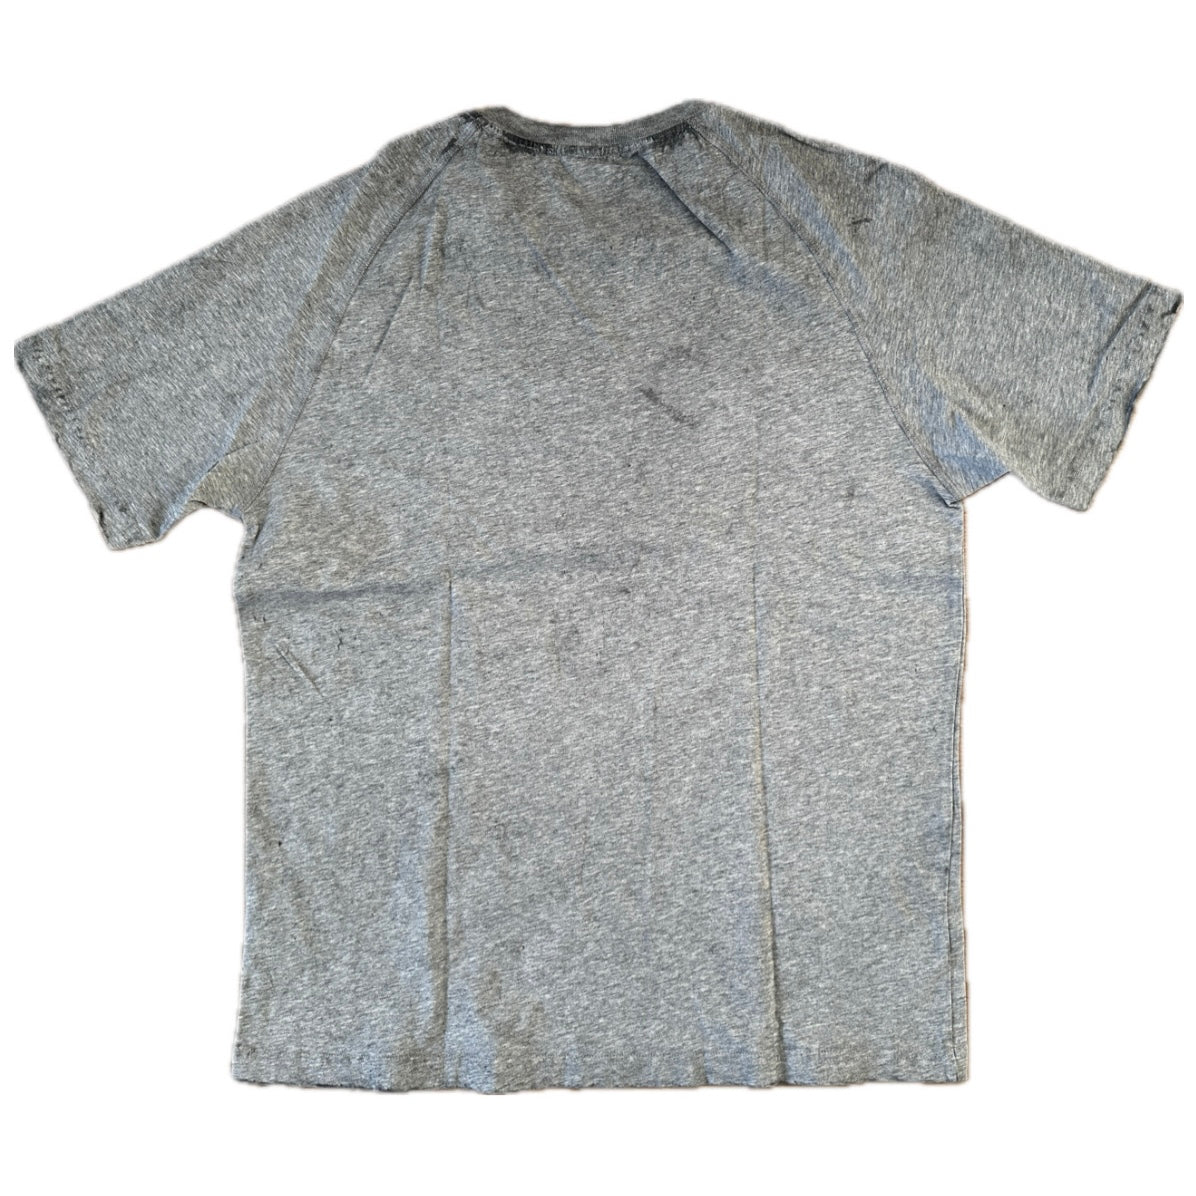 Stone Island 2021 Dust Colour Treatment Grey T-Shirt - M